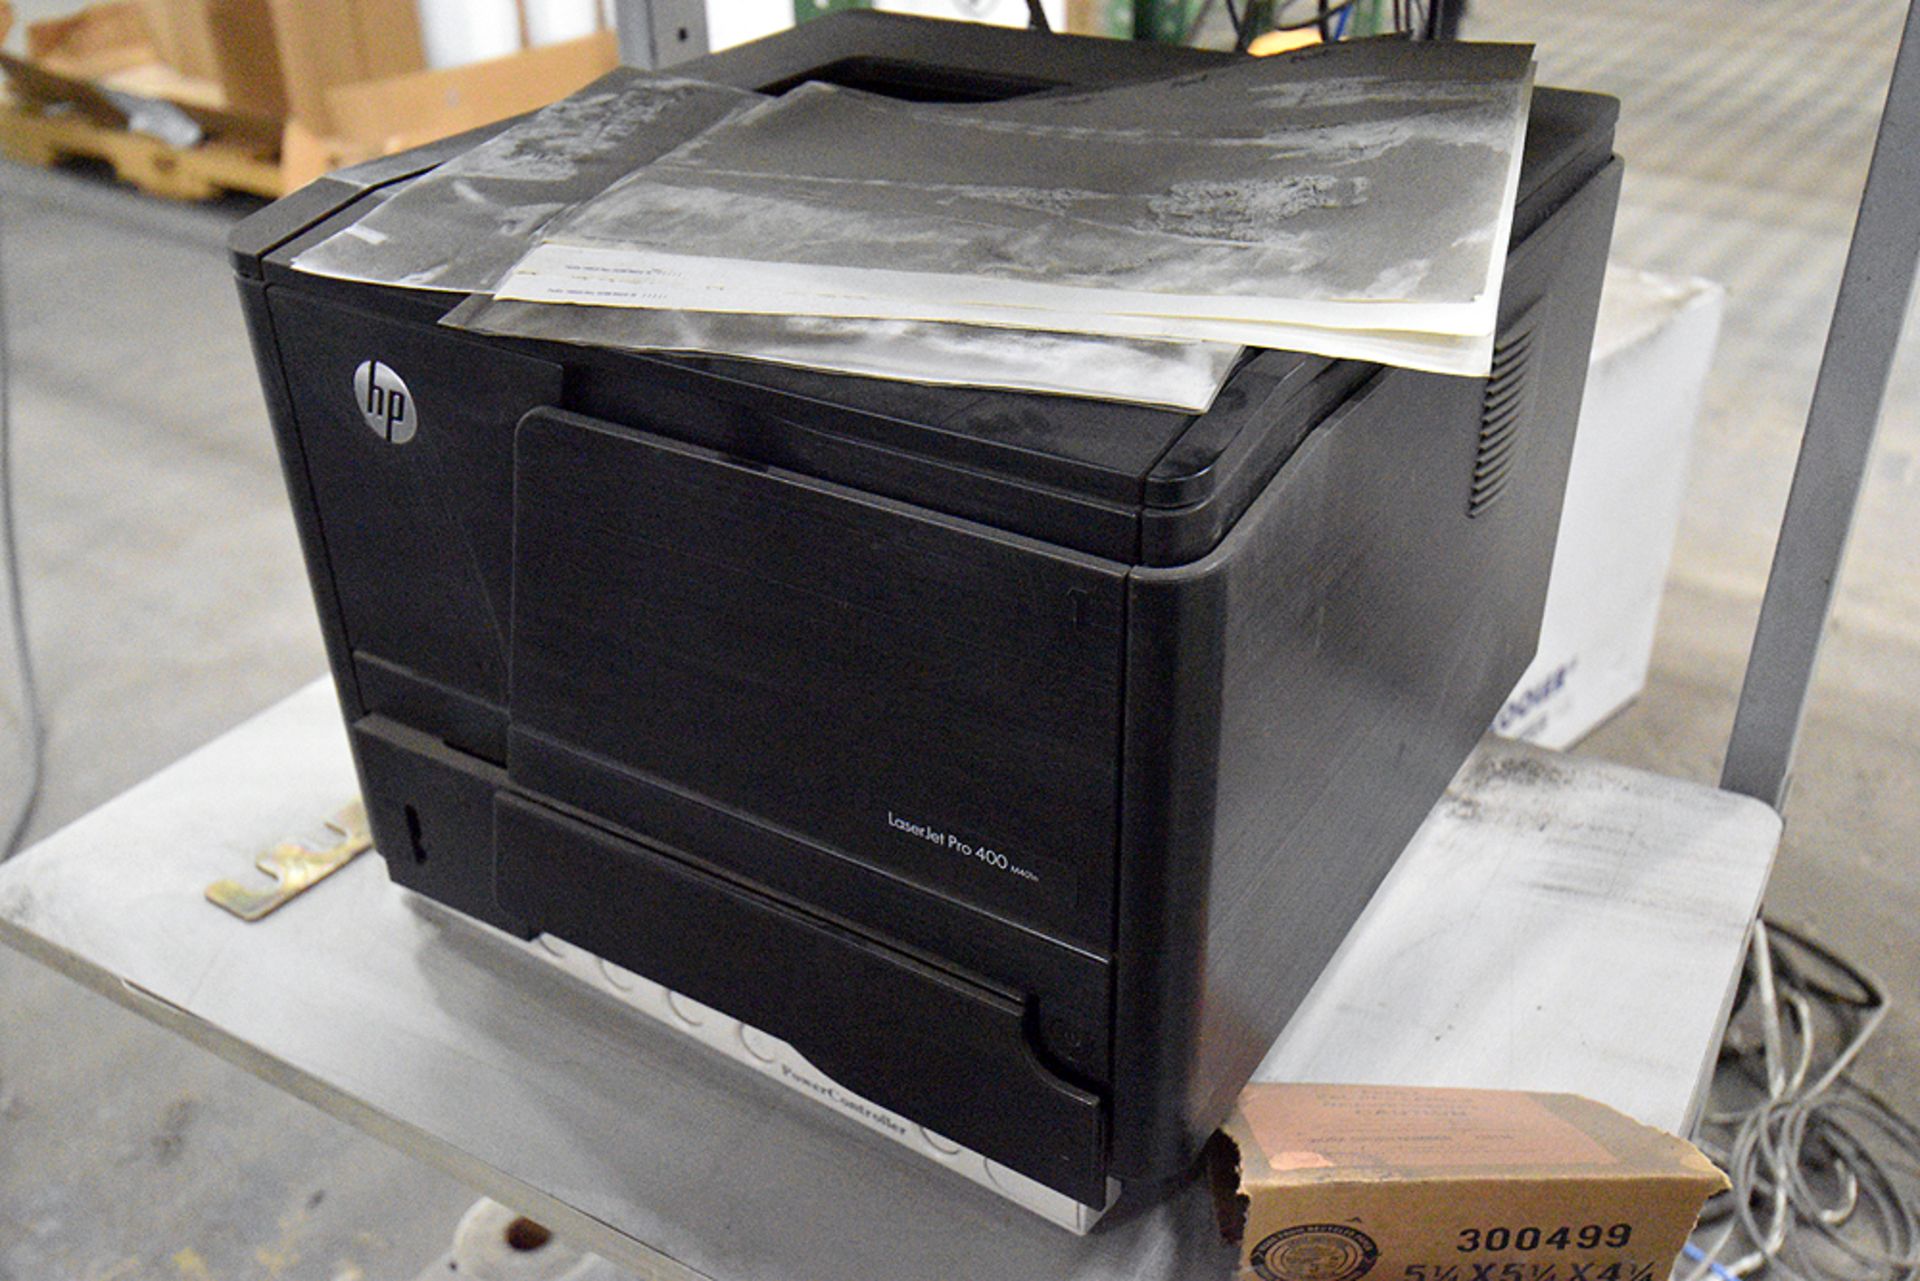 Zebra P505 Label Printer, HP RP500 i5 PC, Laser Printer, Toledo Scale & Cart - Image 3 of 4